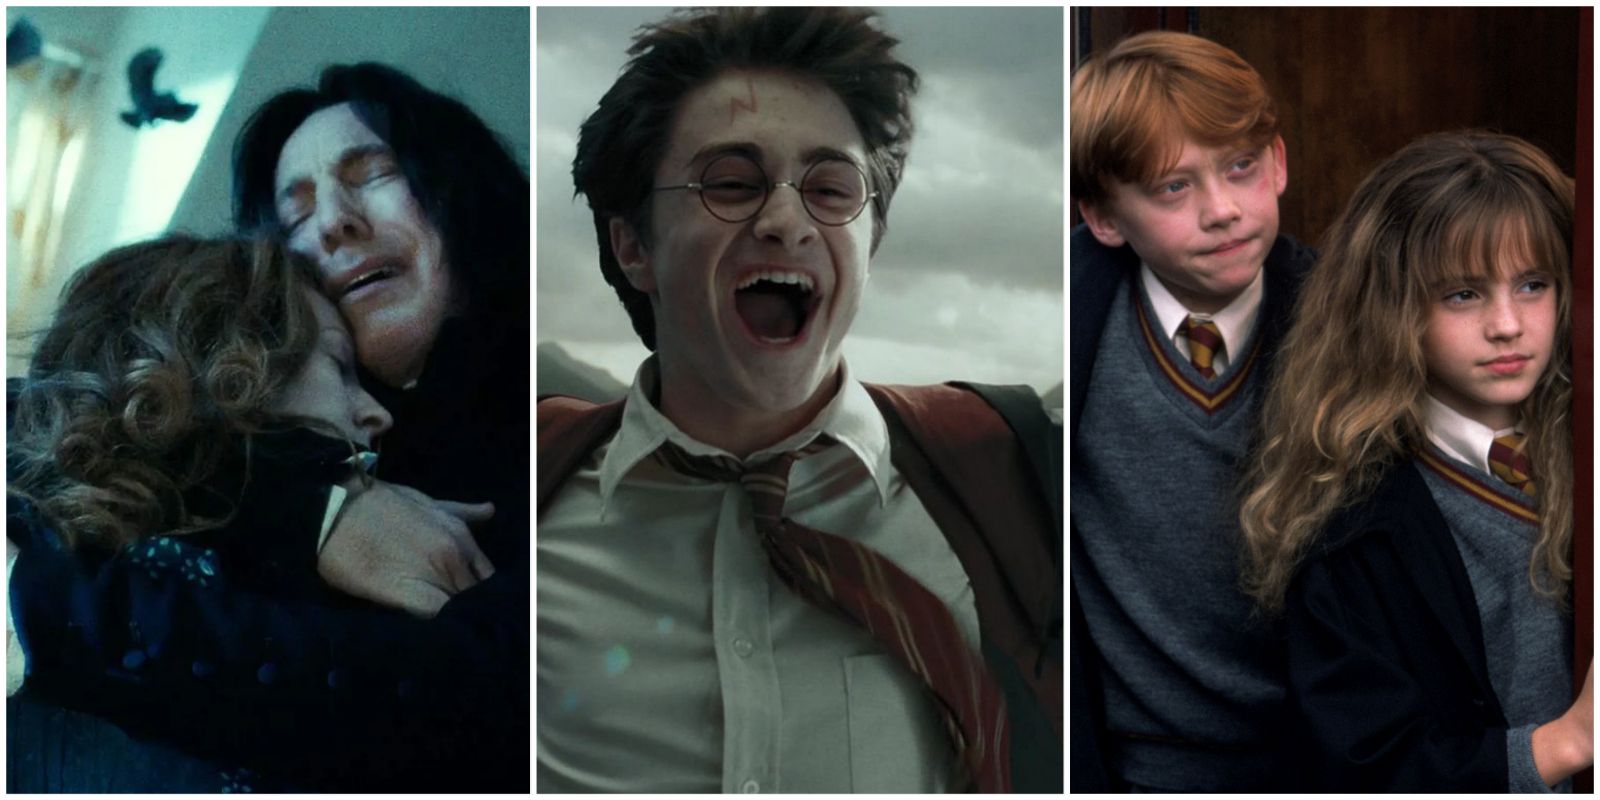 The 'Harry Potter' Cast's Most Shocking Revelations